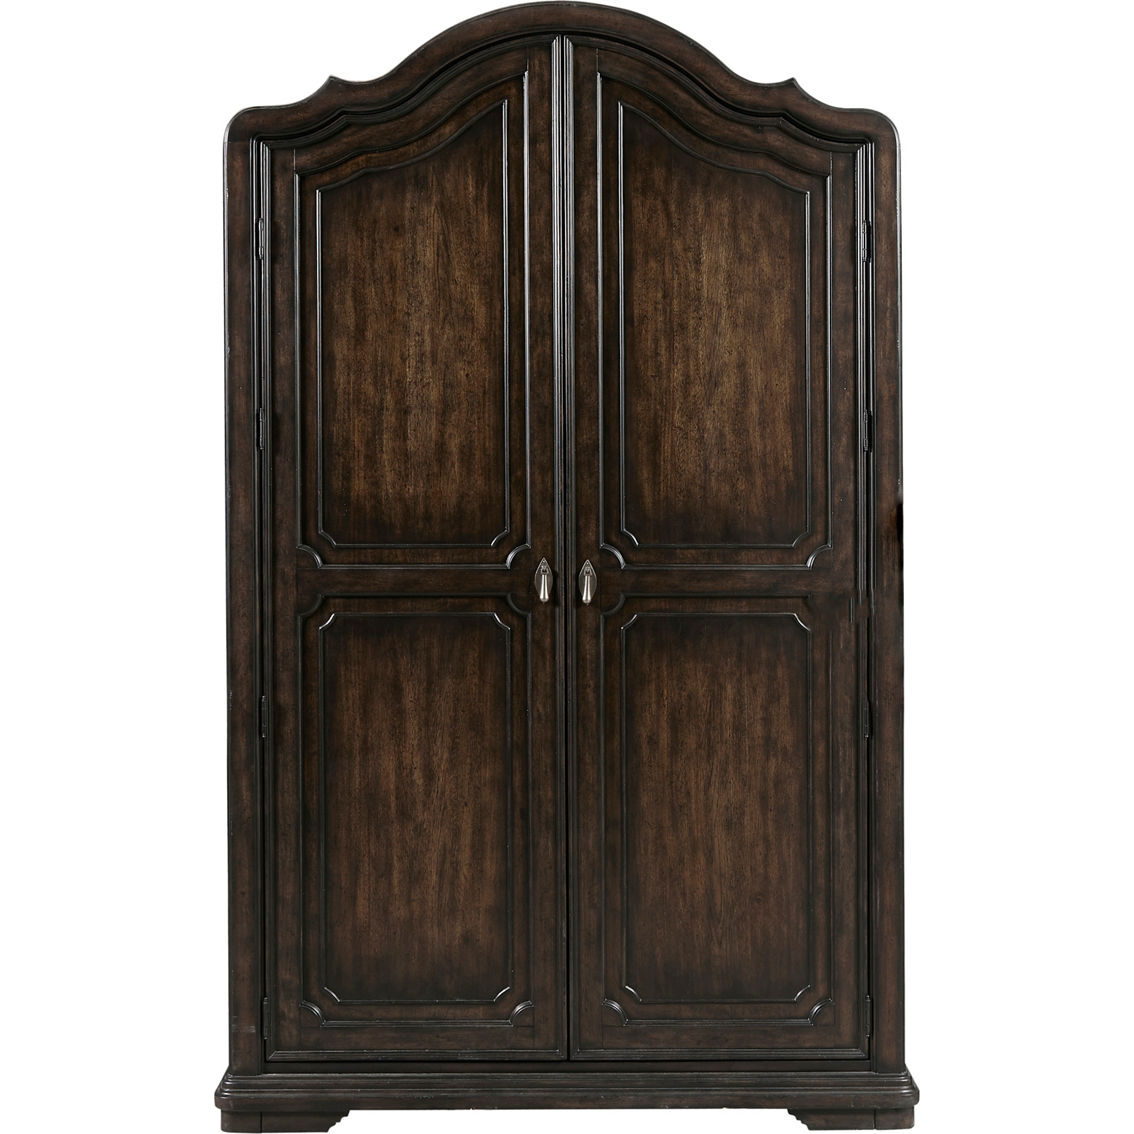 Pulaski Furniture Cooper Falls 2 Door Armoire with Drawers - Image 2 of 6